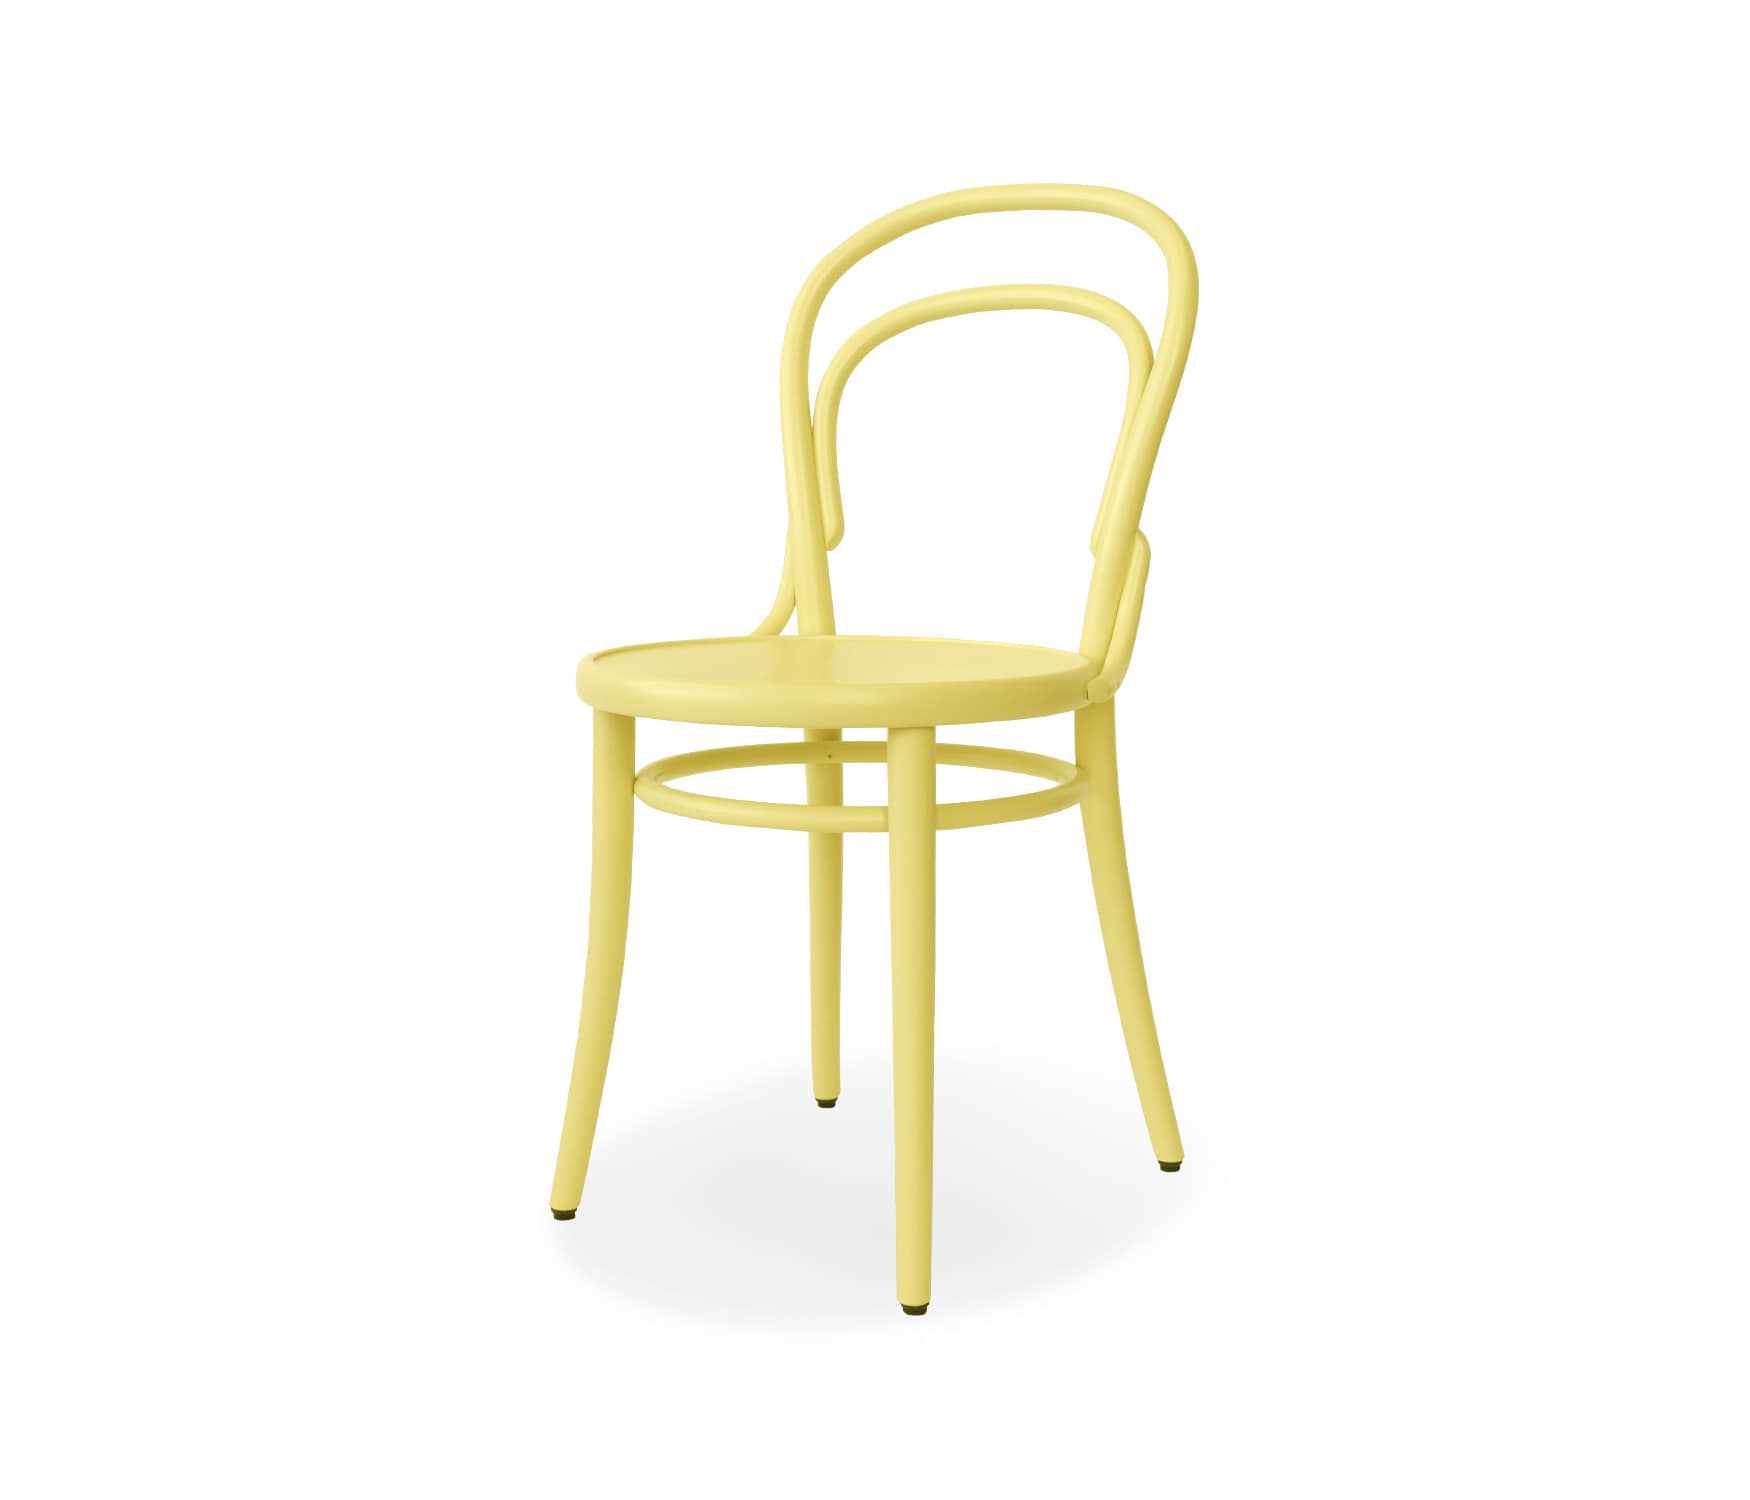 Chair 14 - Creamy Yellow